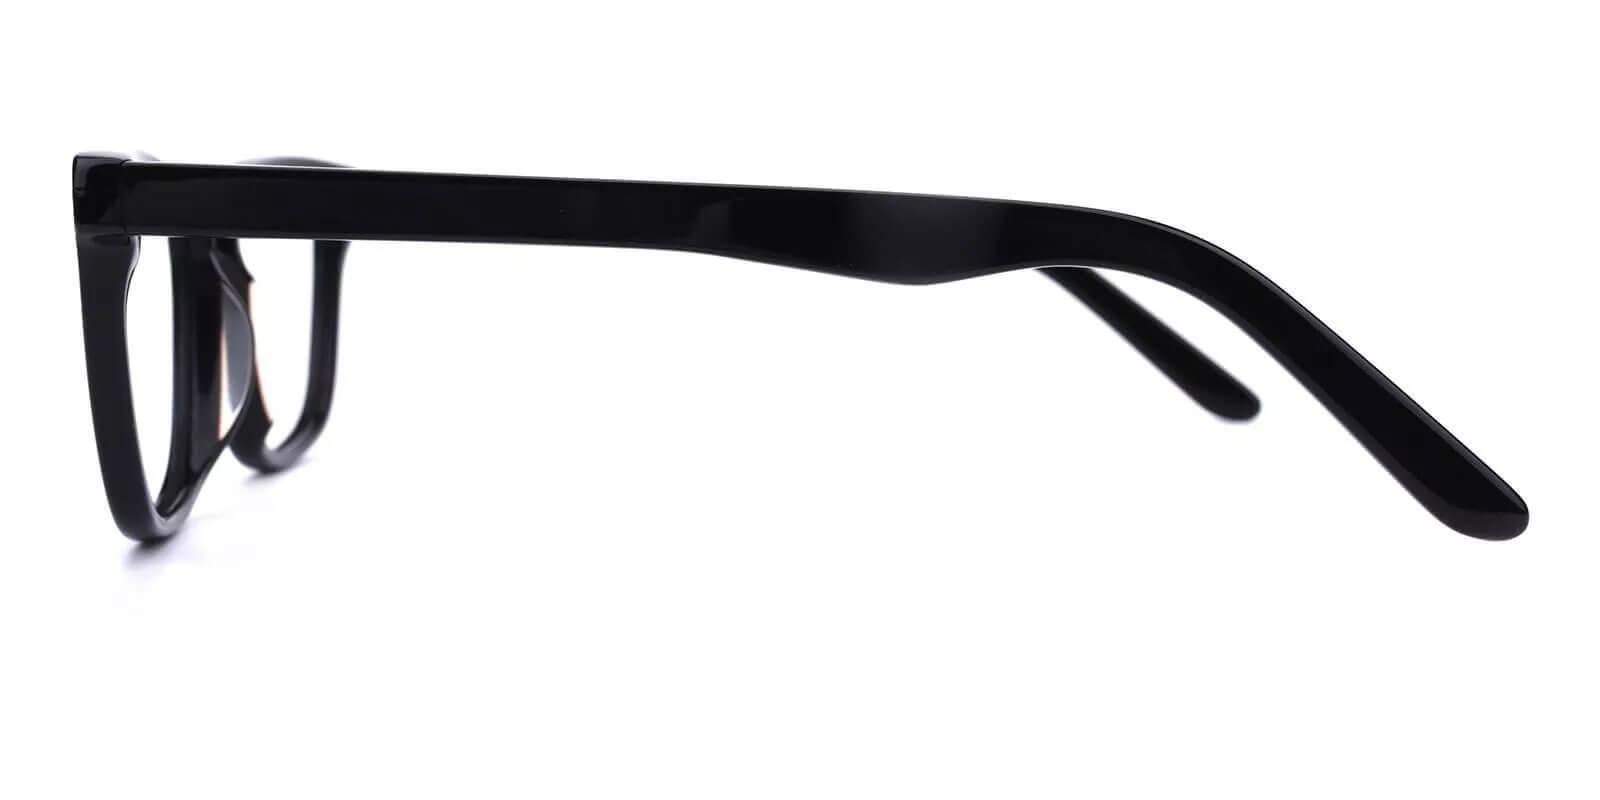 Alta Black Acetate Eyeglasses , SpringHinges , UniversalBridgeFit Frames from ABBE Glasses